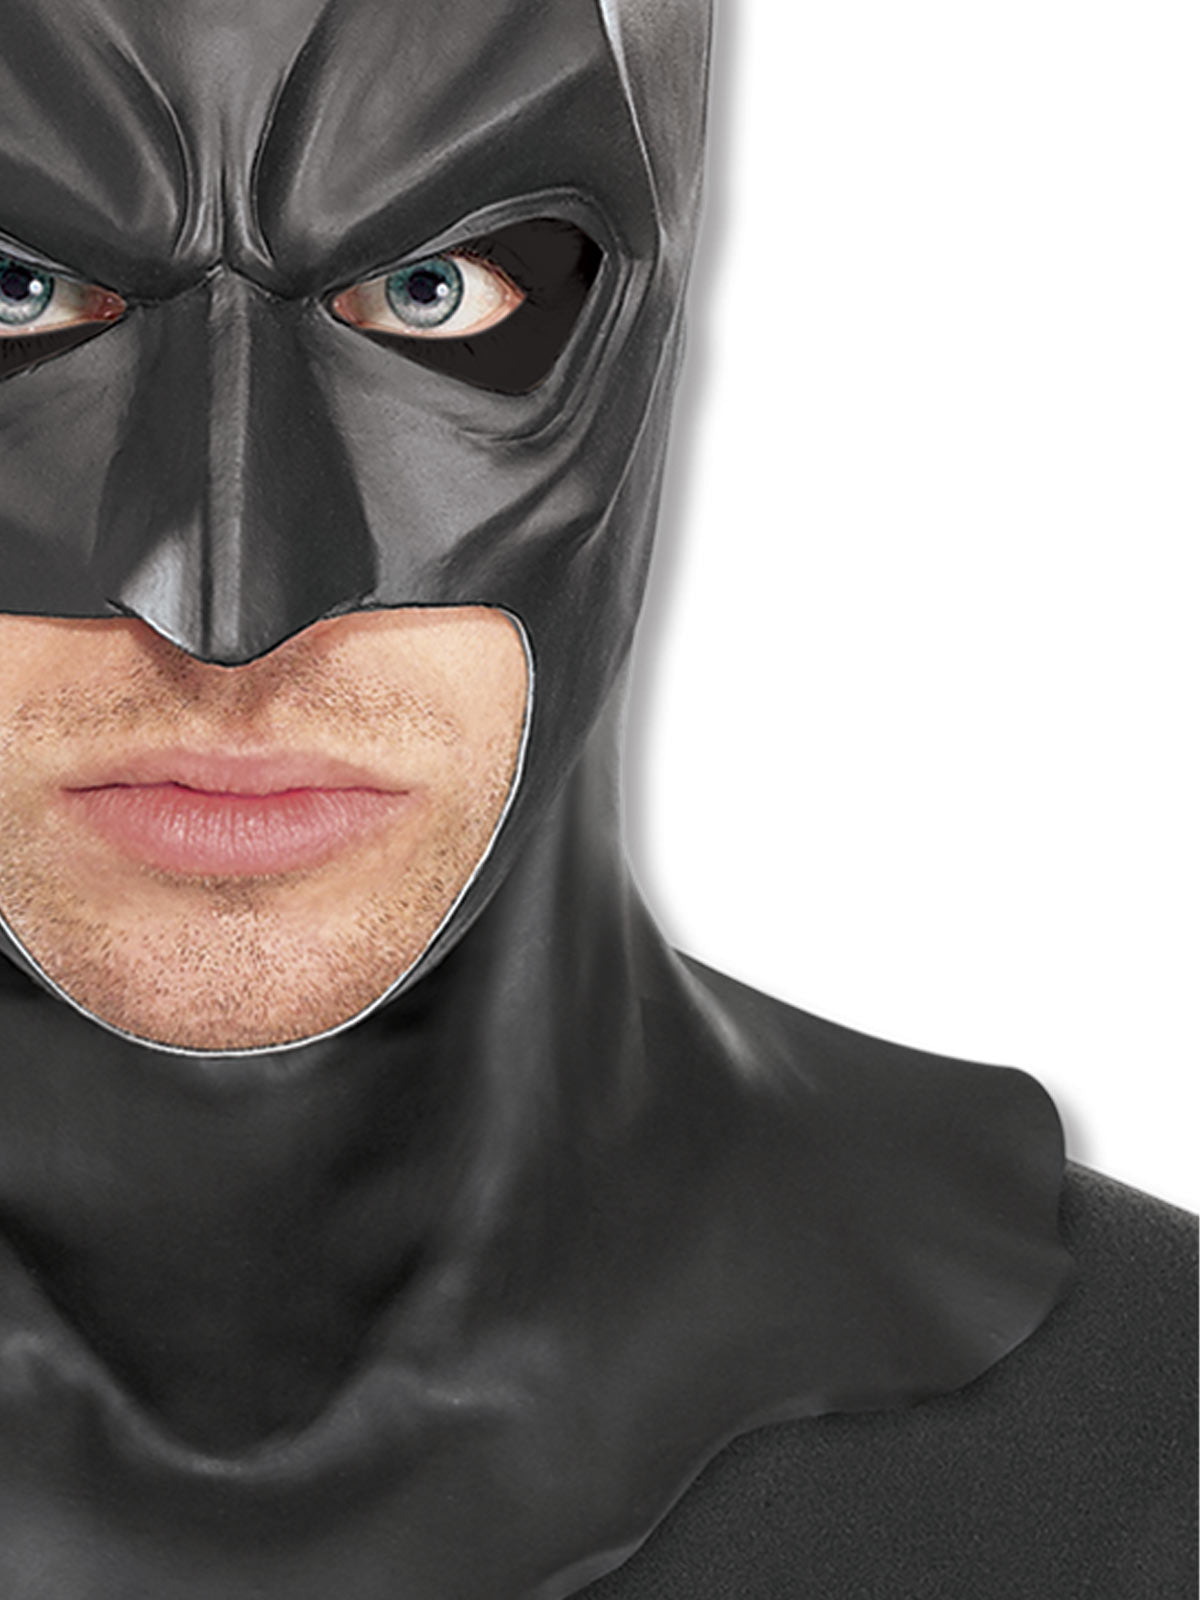 Batman Full Mask Adult Size - Genuine Licensed